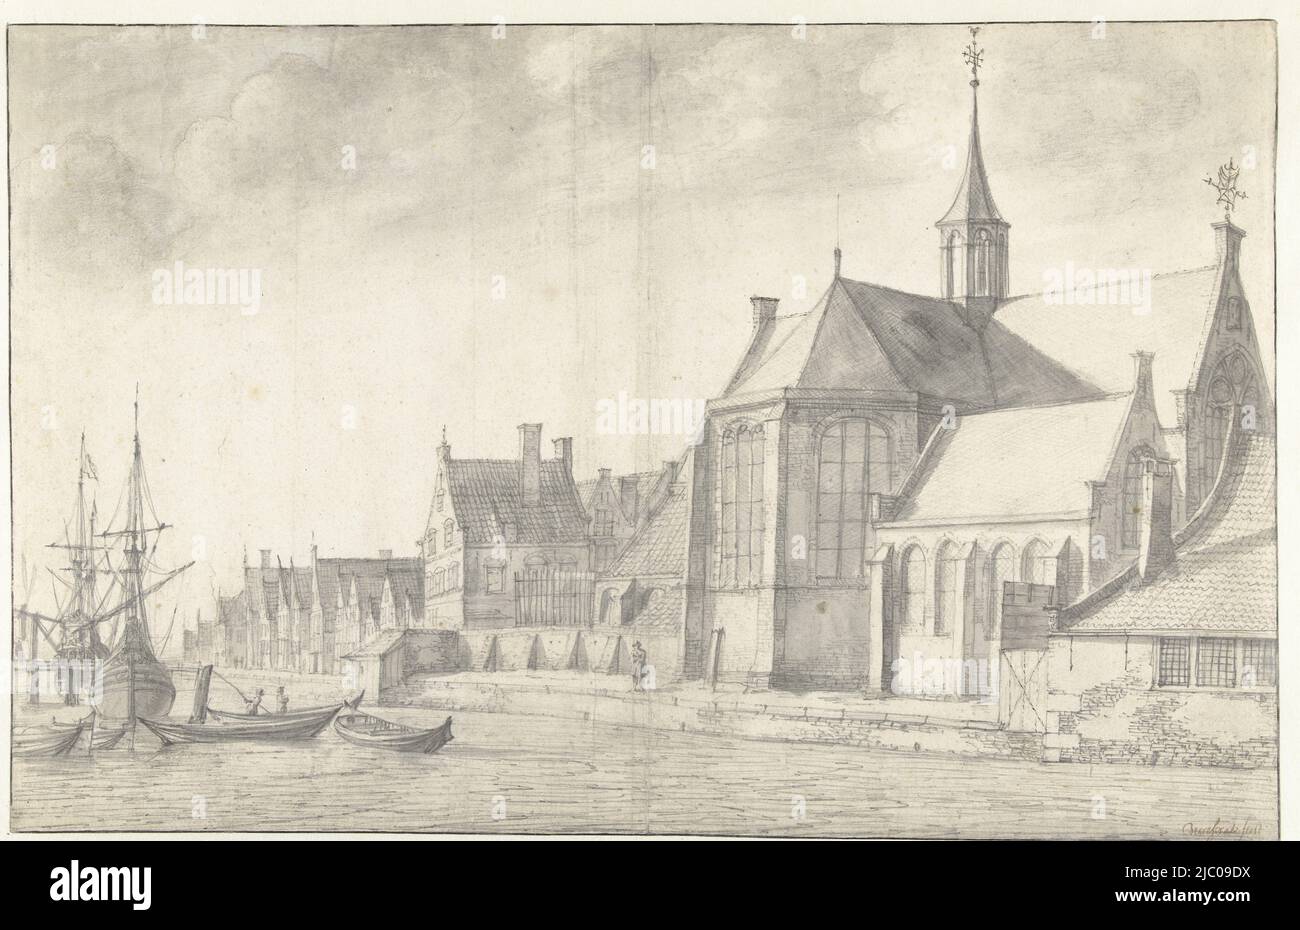 Church in Delfshaven, draughtsman: Jan Abrahamsz. Beerstraten, 1600 - 1699, paper, brush, h 289 mm × w 452 mm Stock Photo